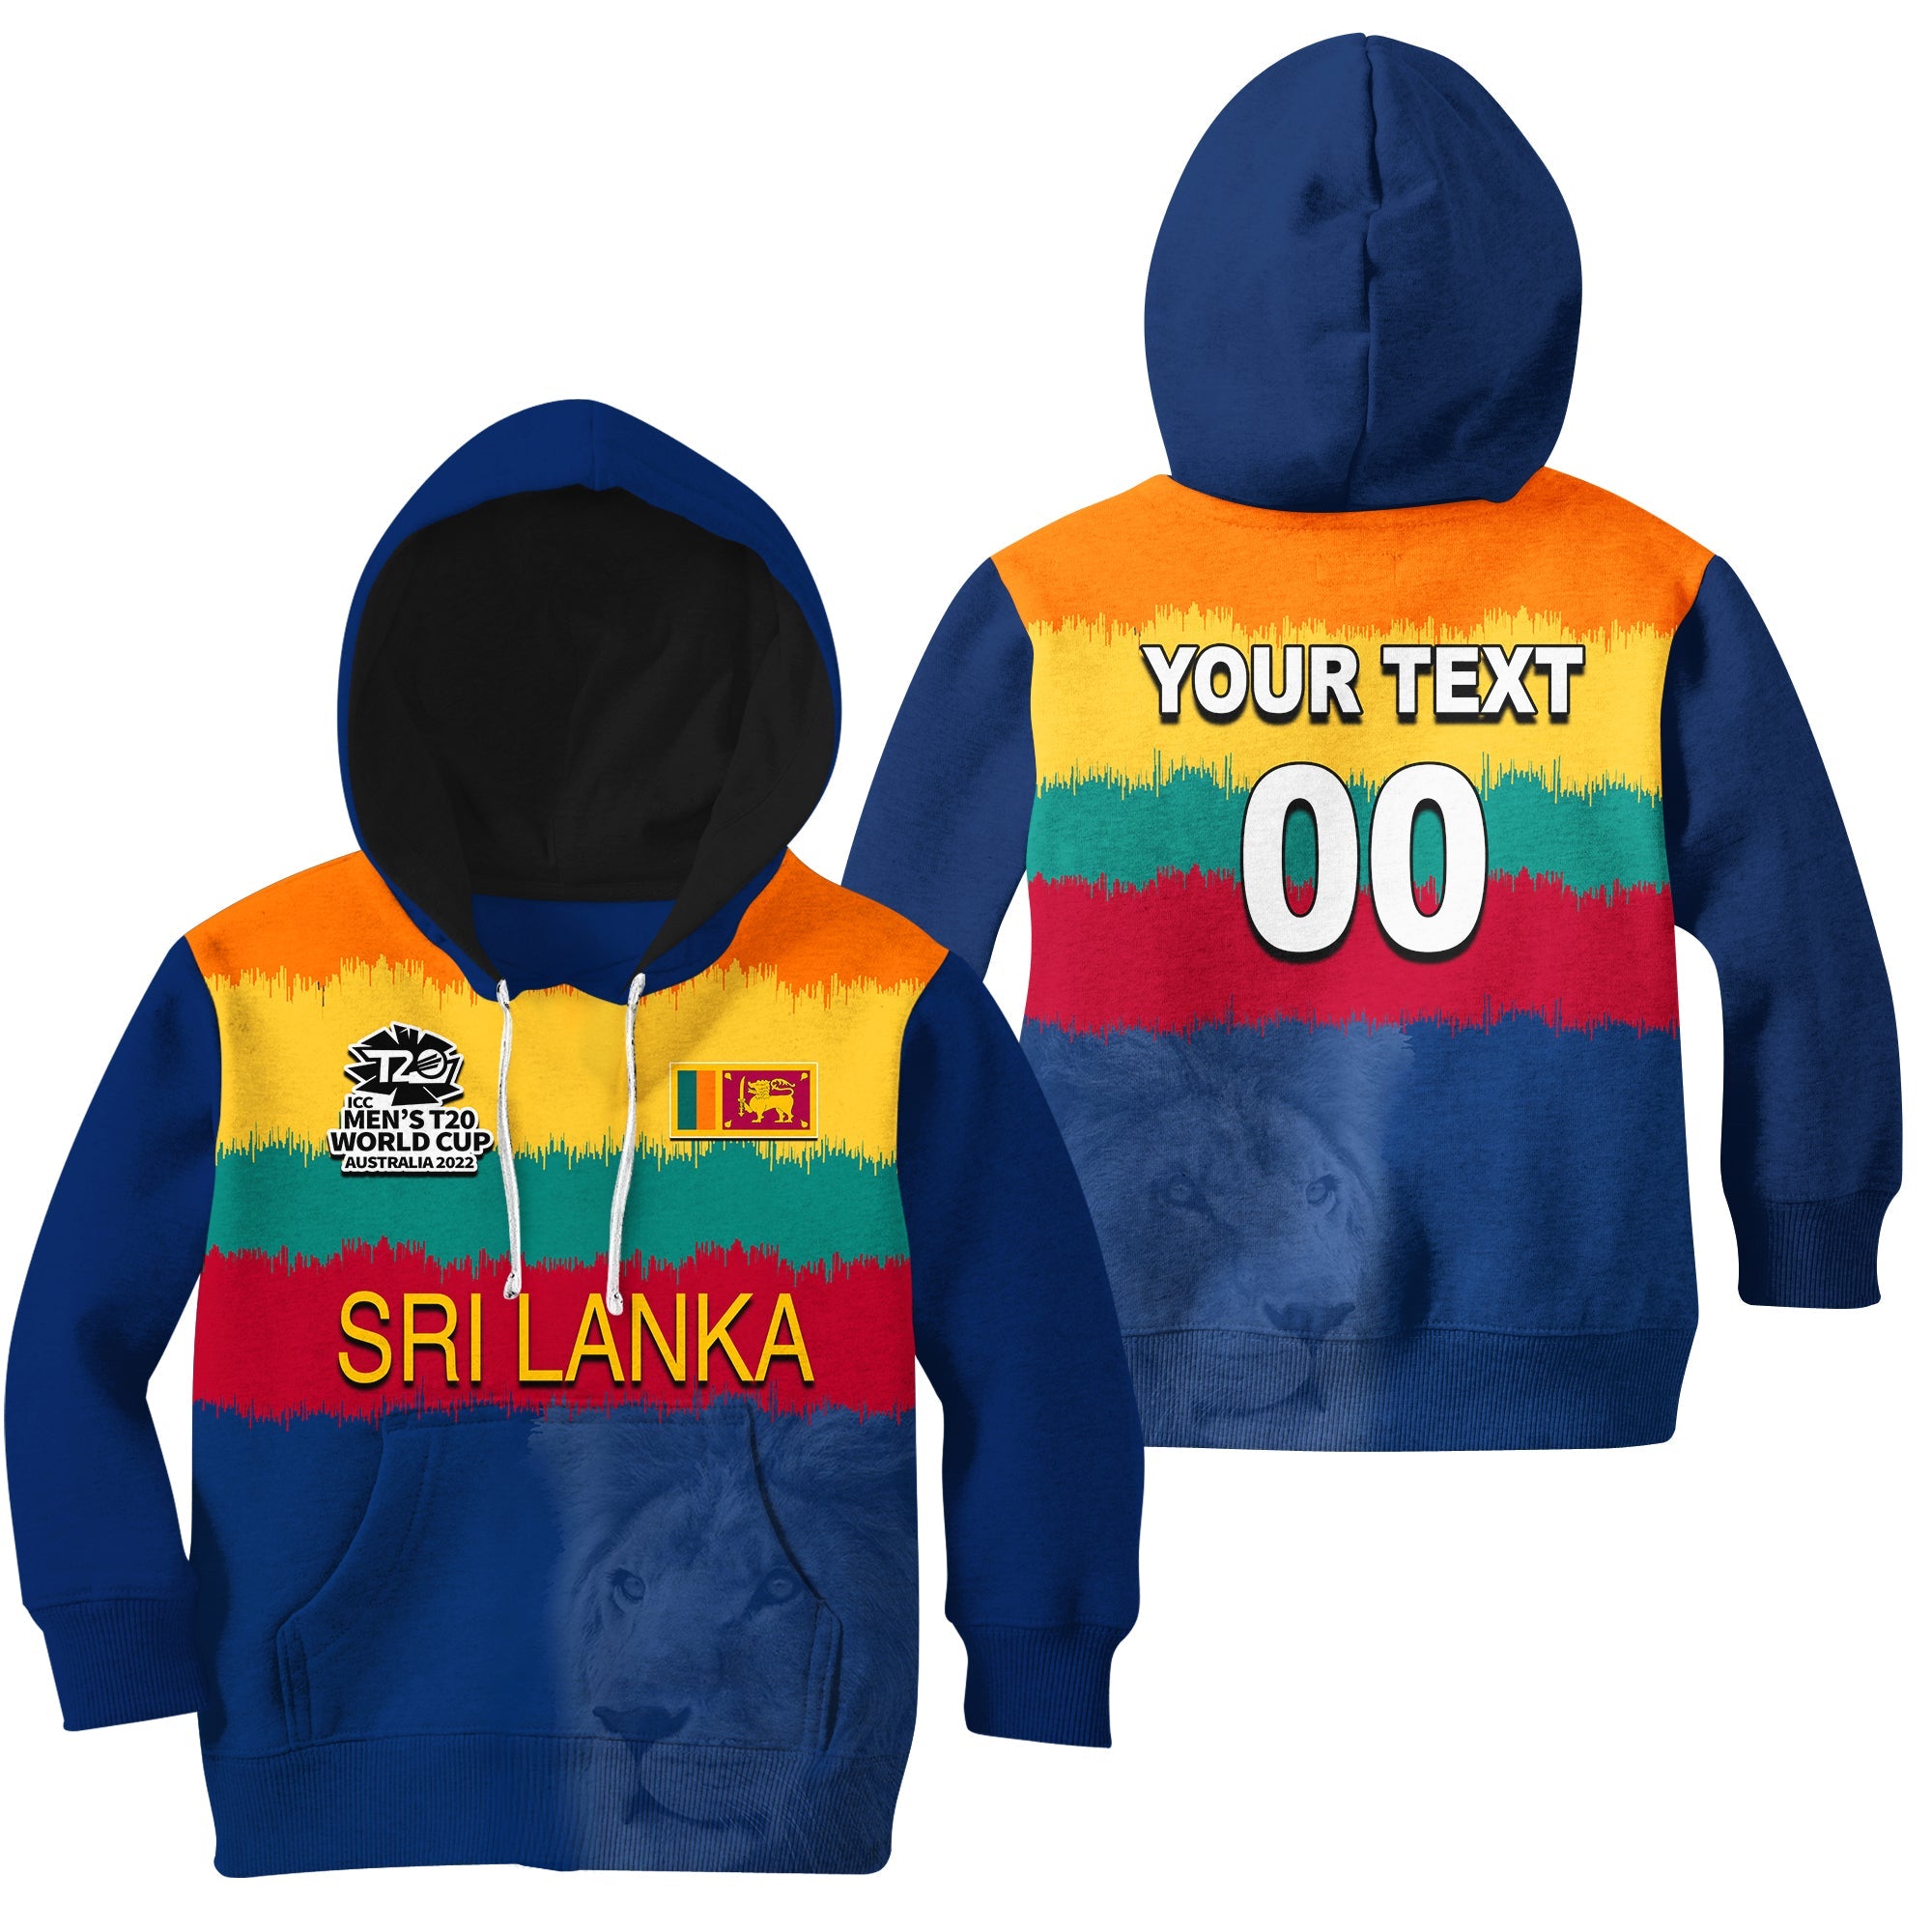 (Custom Personalised And Number) Sri Lanka Cricket Men's T20 World Cup Hoodie KID